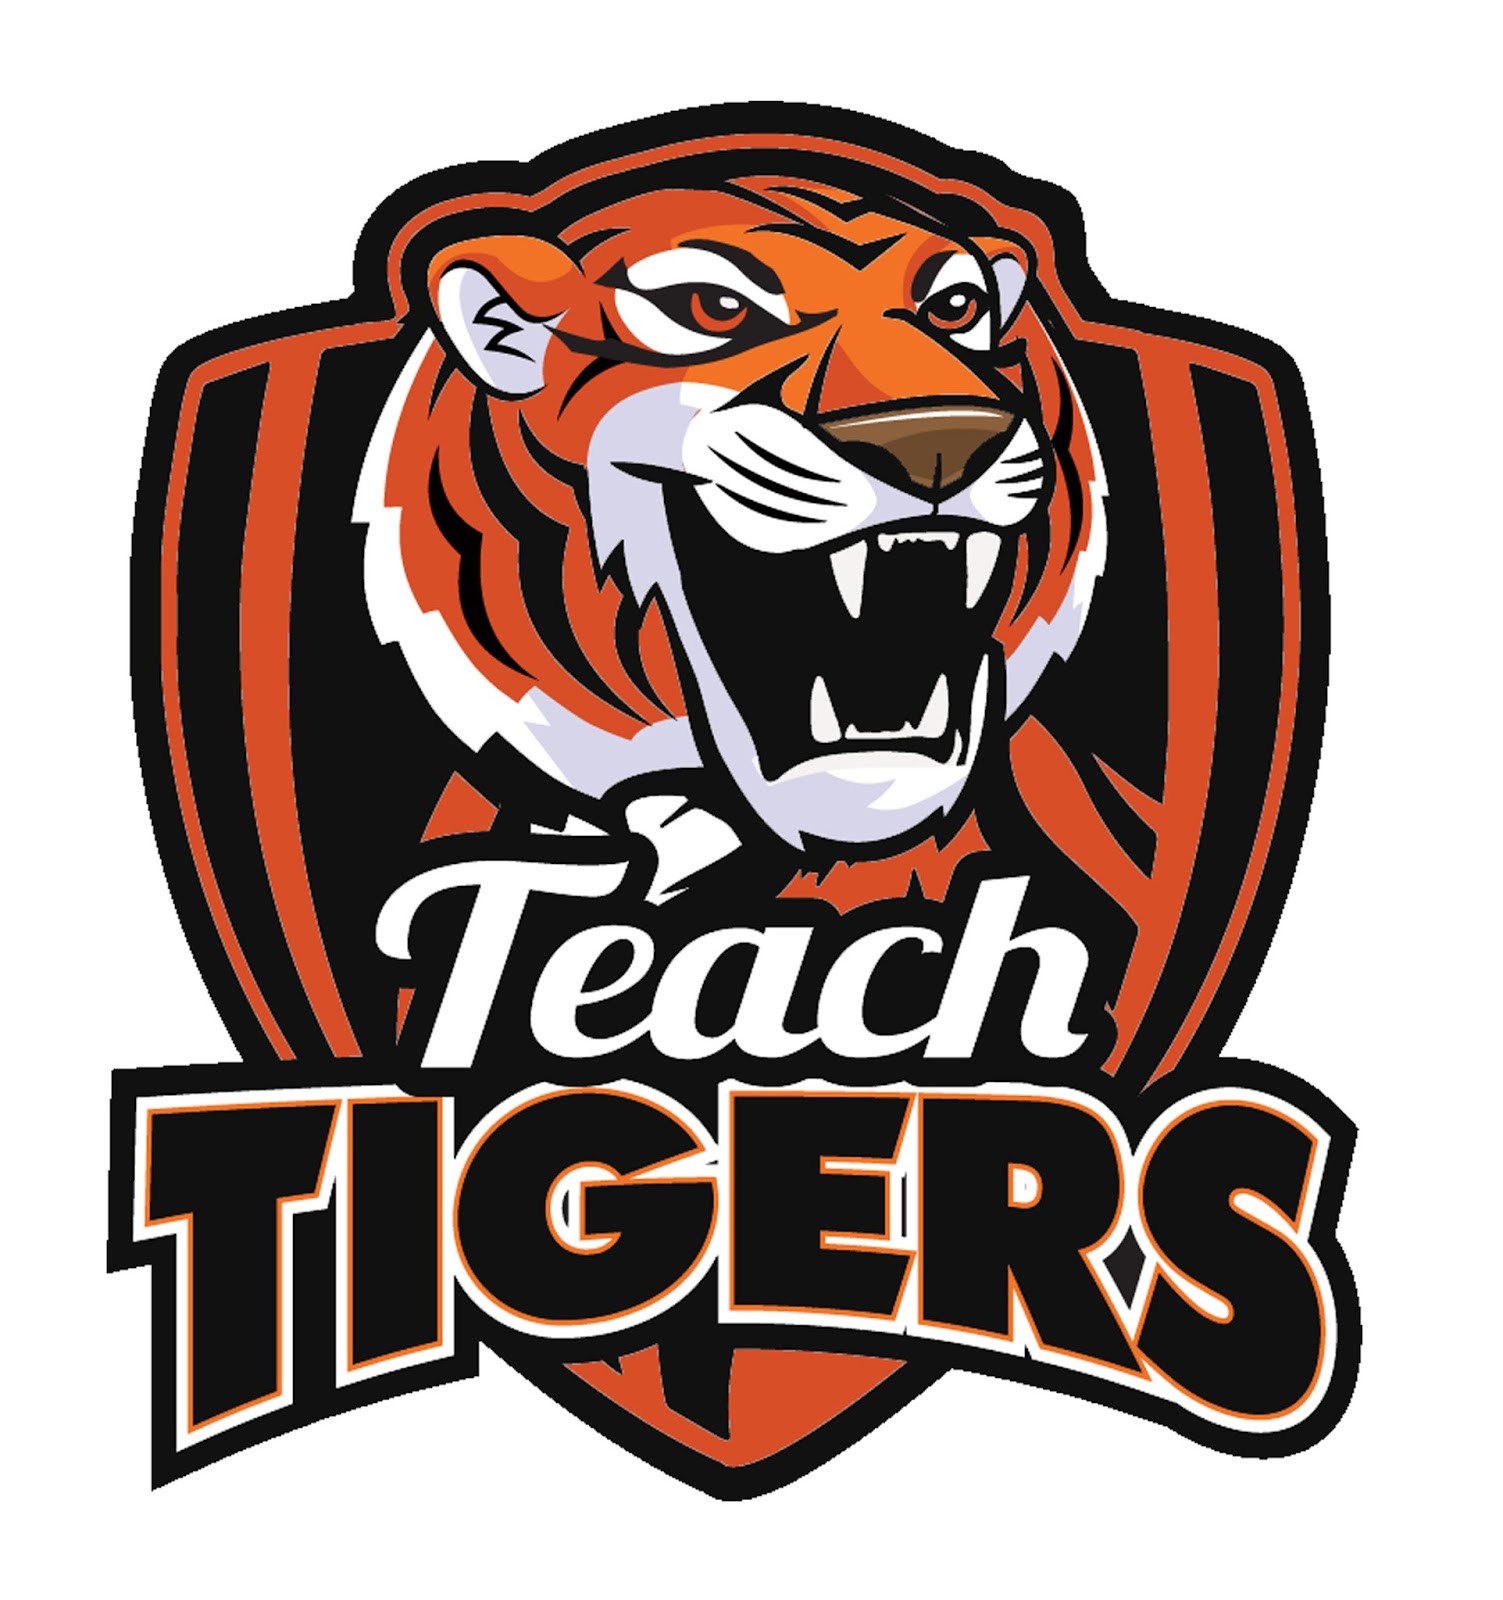 Teach Tiger logo 2017 color.JPG